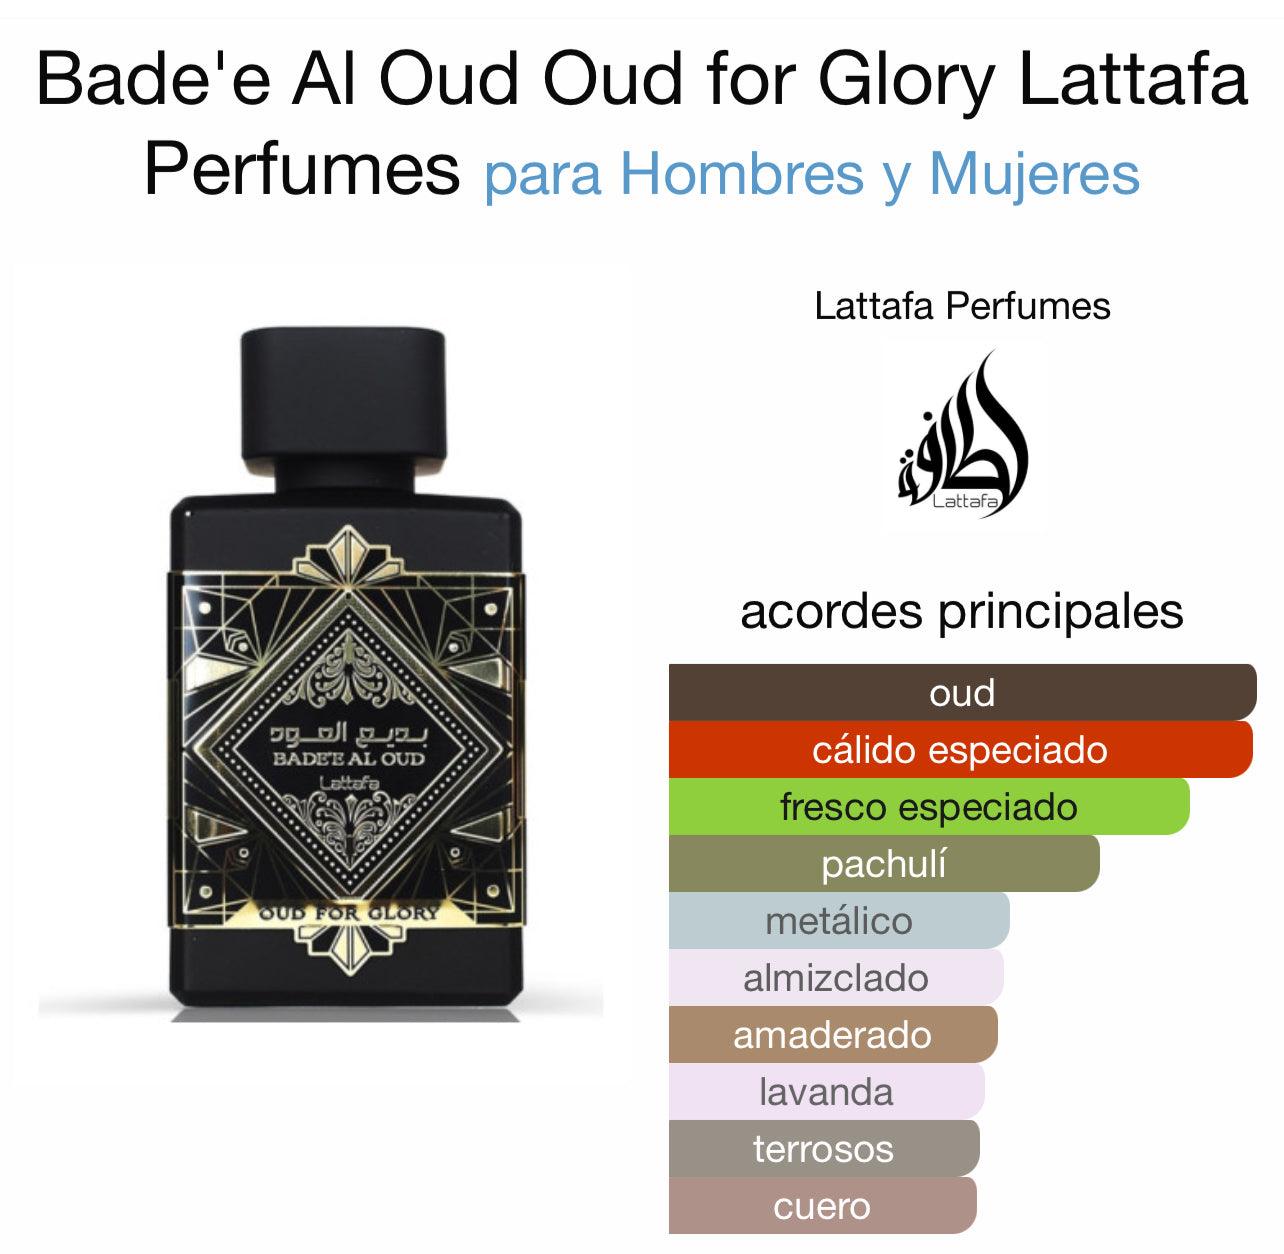 Badee Al Oud For Glory Lattafa 100 ml - Dubai Esencias